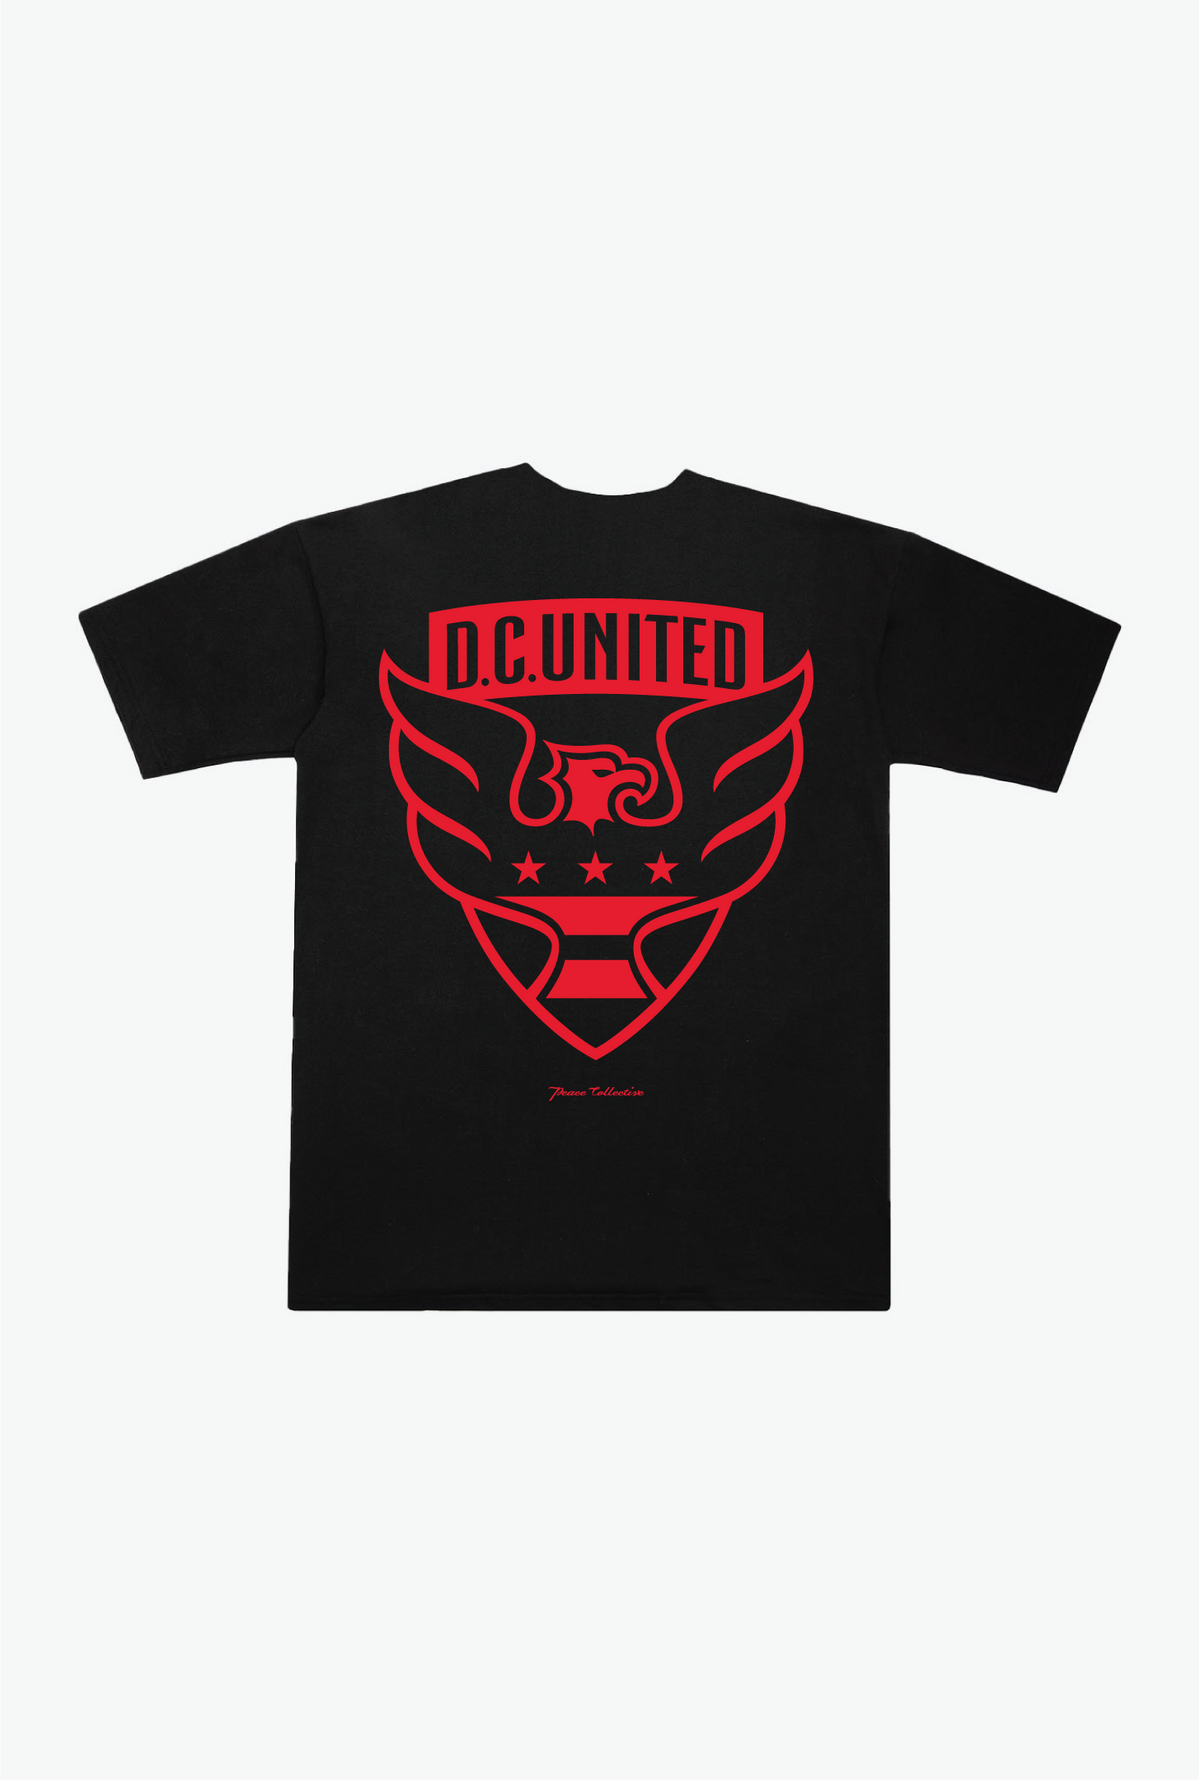 D.C. United Essentials Heavyweight T-Shirt - Black